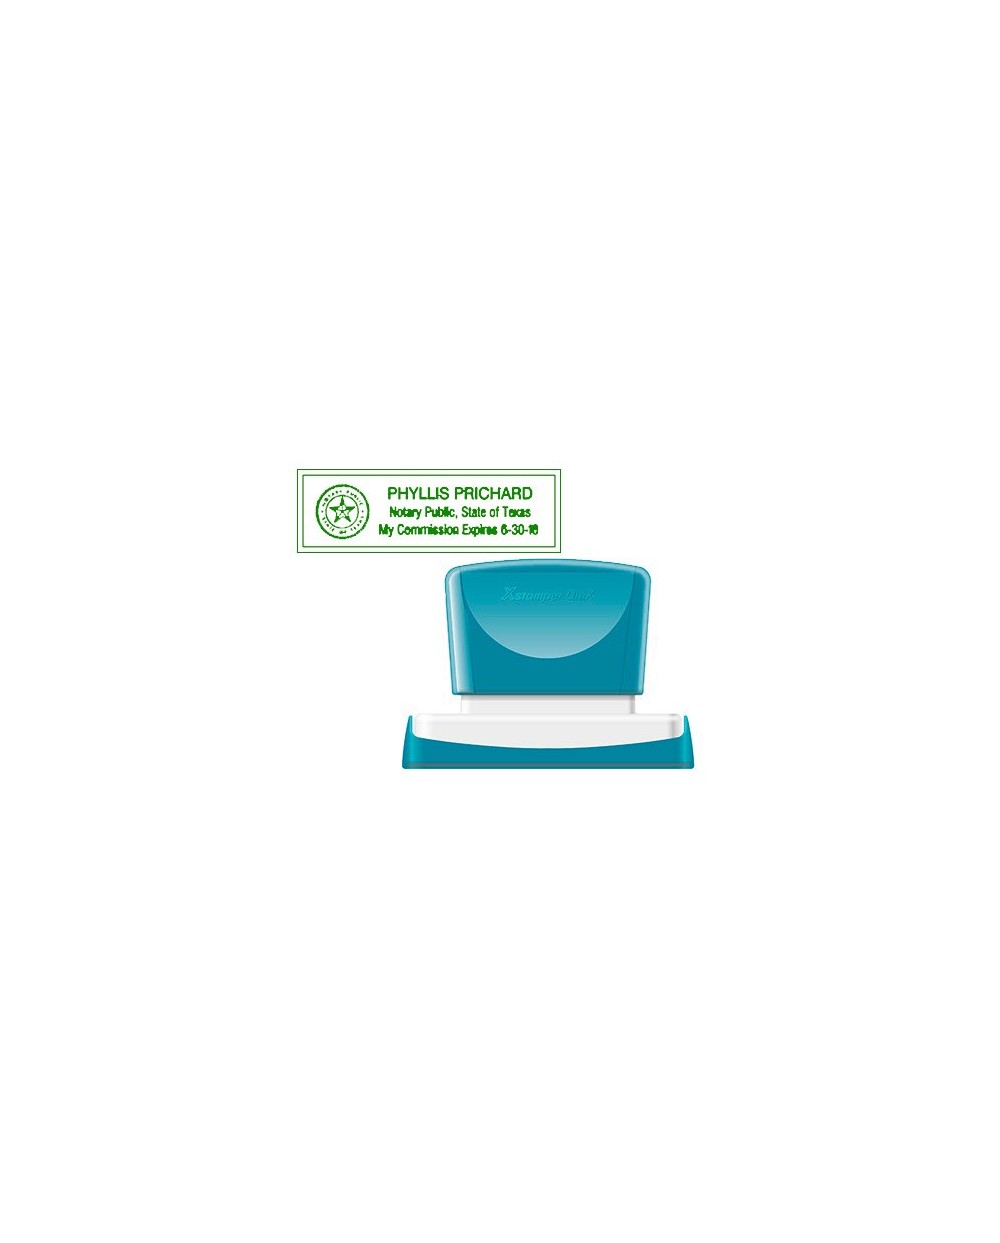 Sello x stamper quix personalizable color verde medidas 22x69 mm q 18